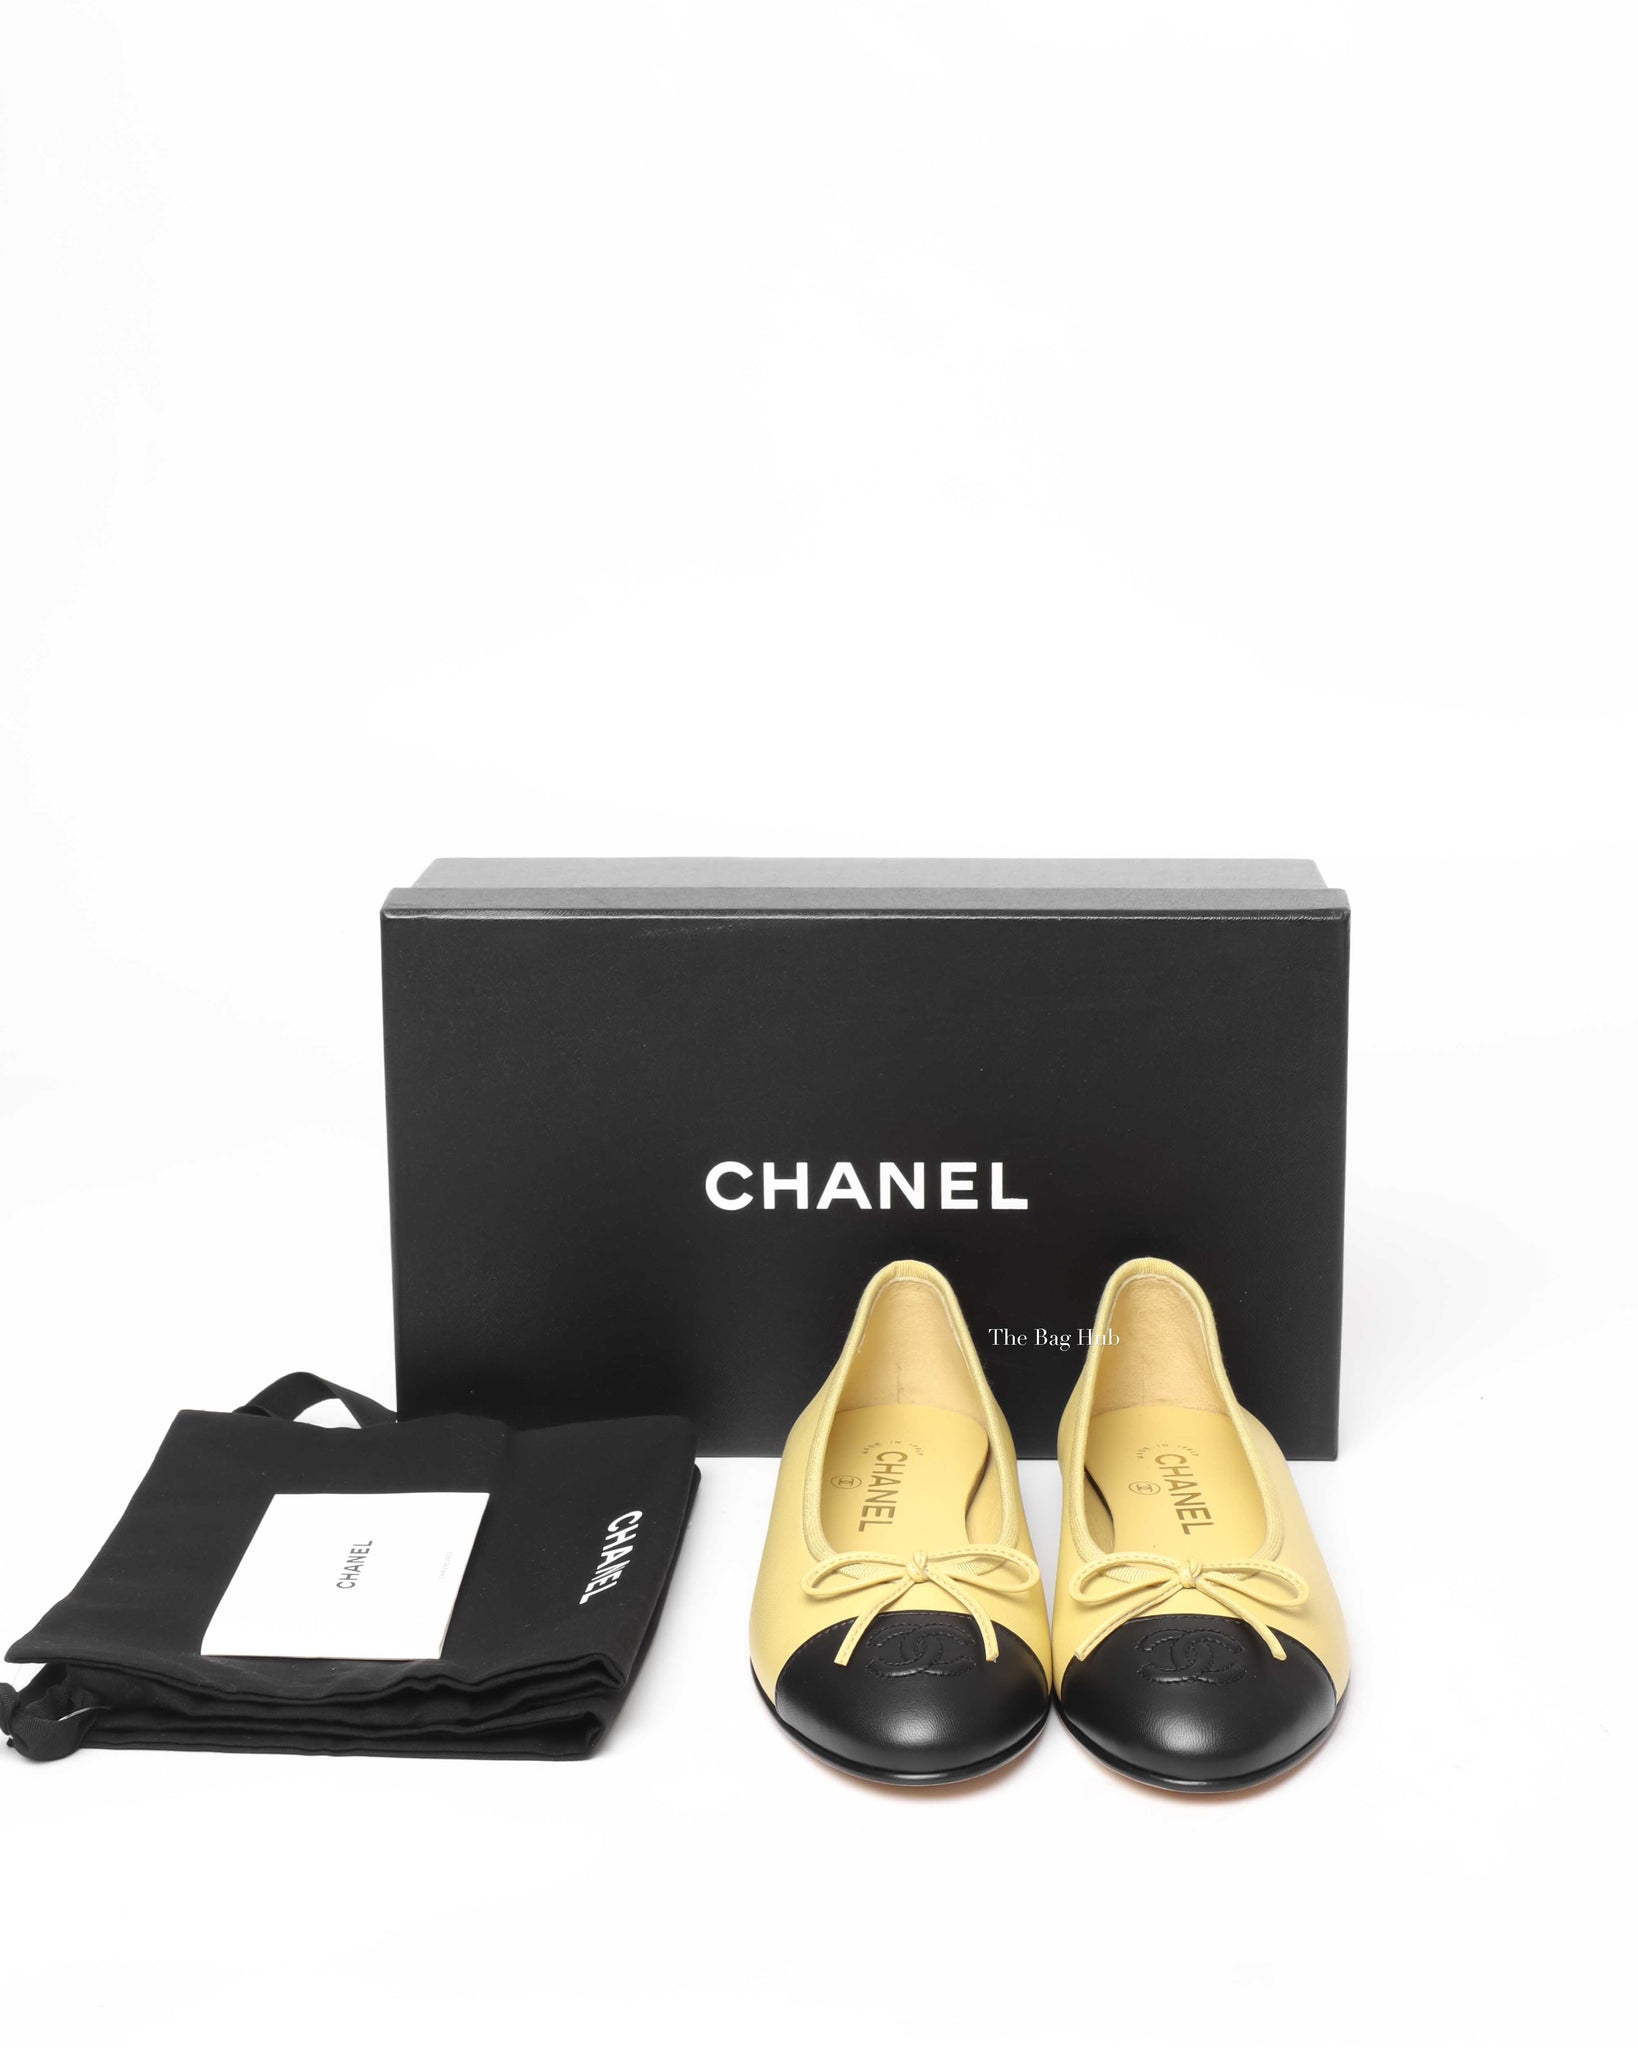 Chanel Yellow/Black Ballet Flats Size 37C-9